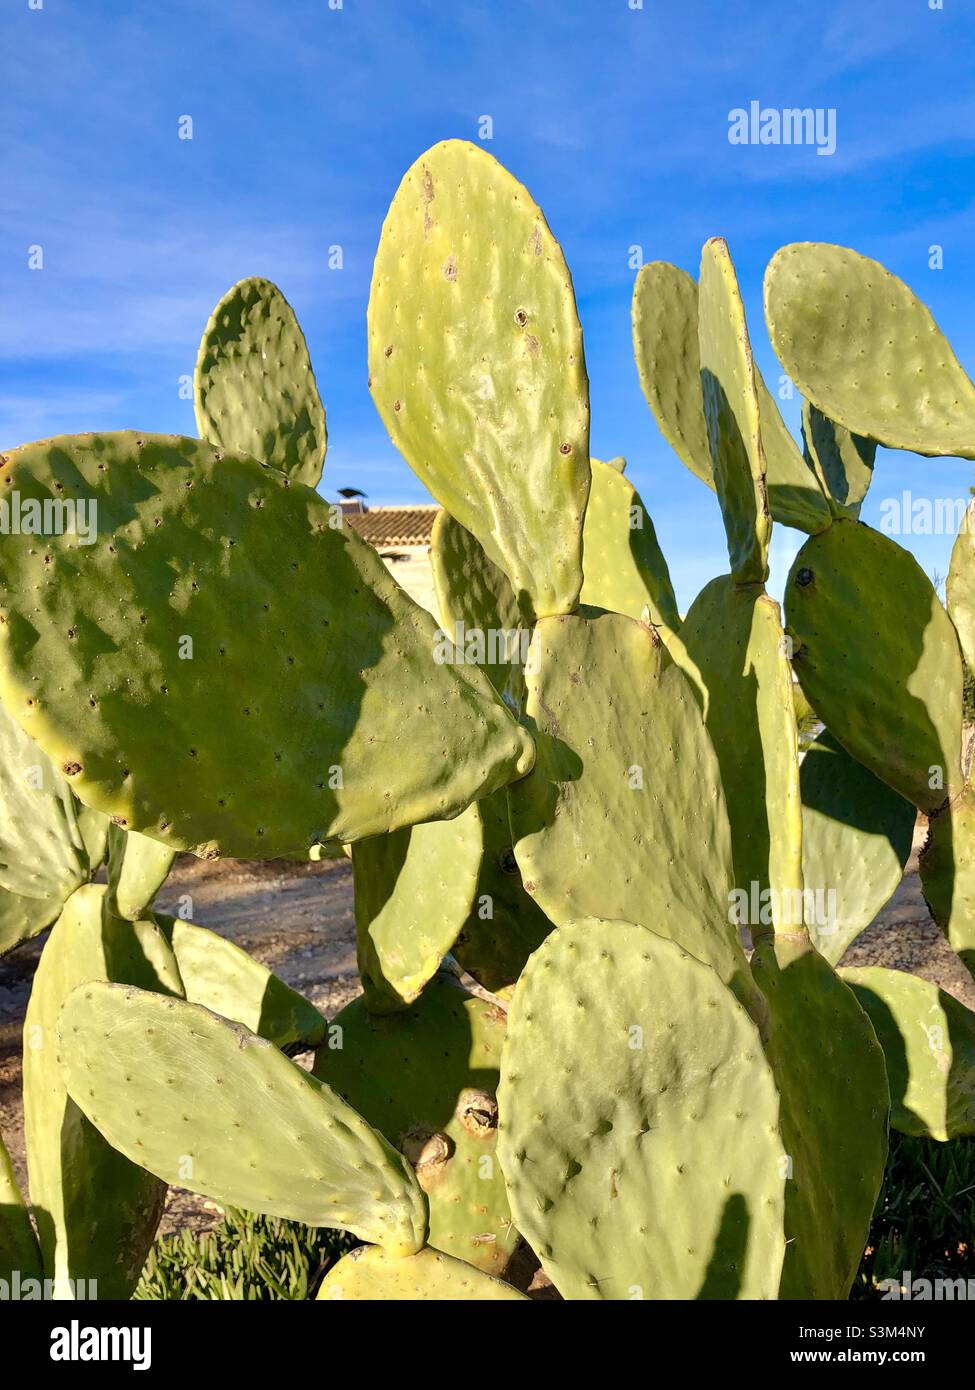 Kaktus ohne Stacheln vor blauem Himmel. Stockfoto